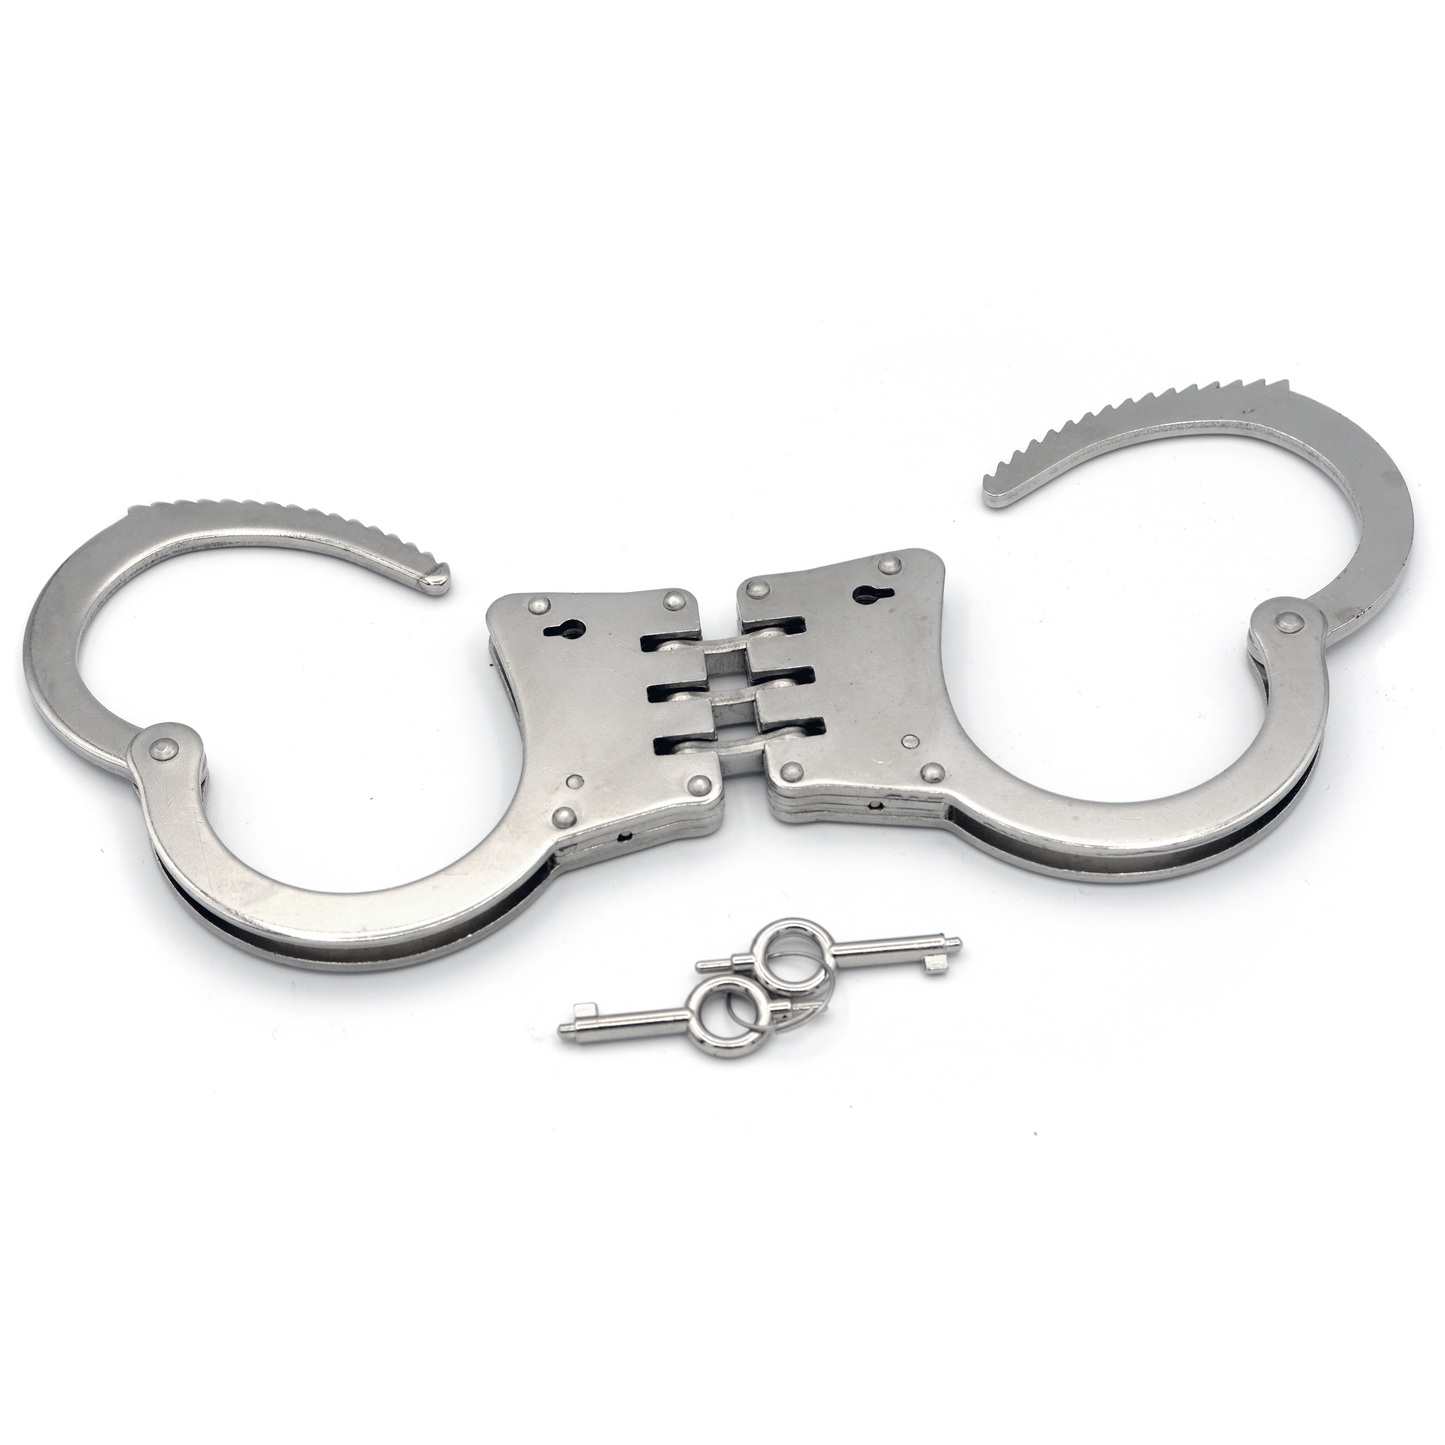 Hinged handcuffs, rigid design with two keys